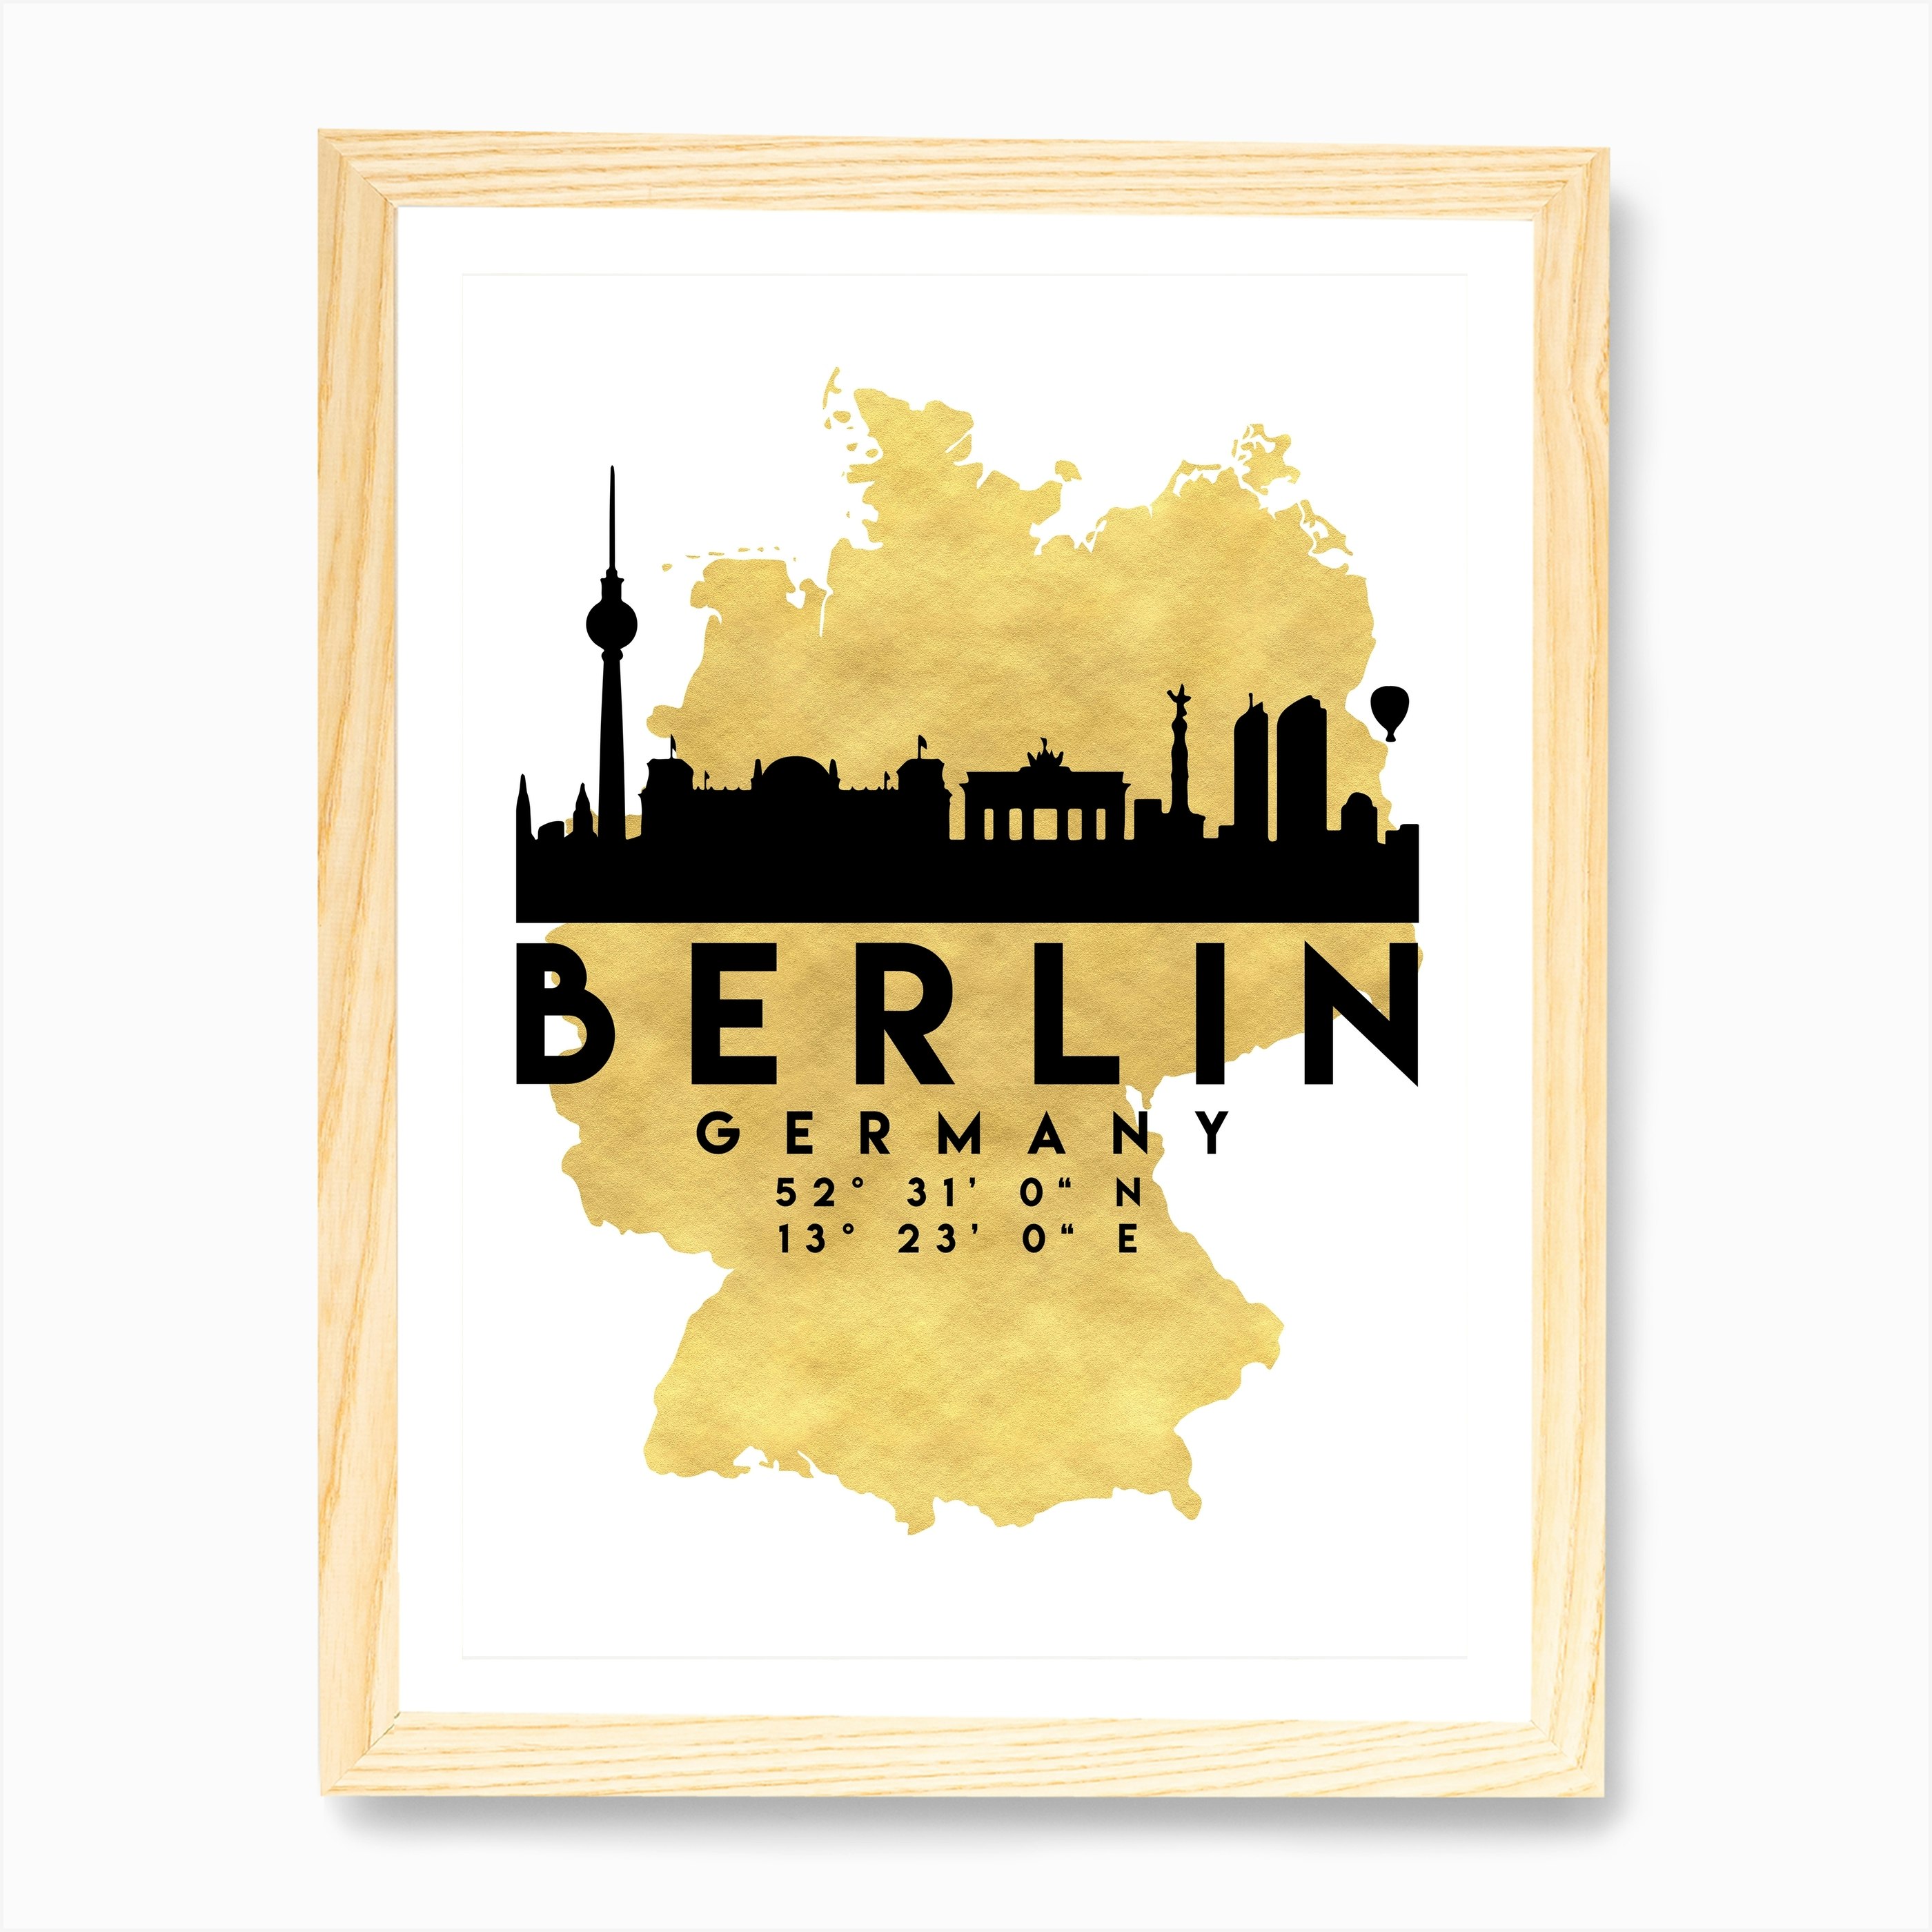 Berlin Germany Silhouette City Skyline Map Art Print by Deificus - Fy